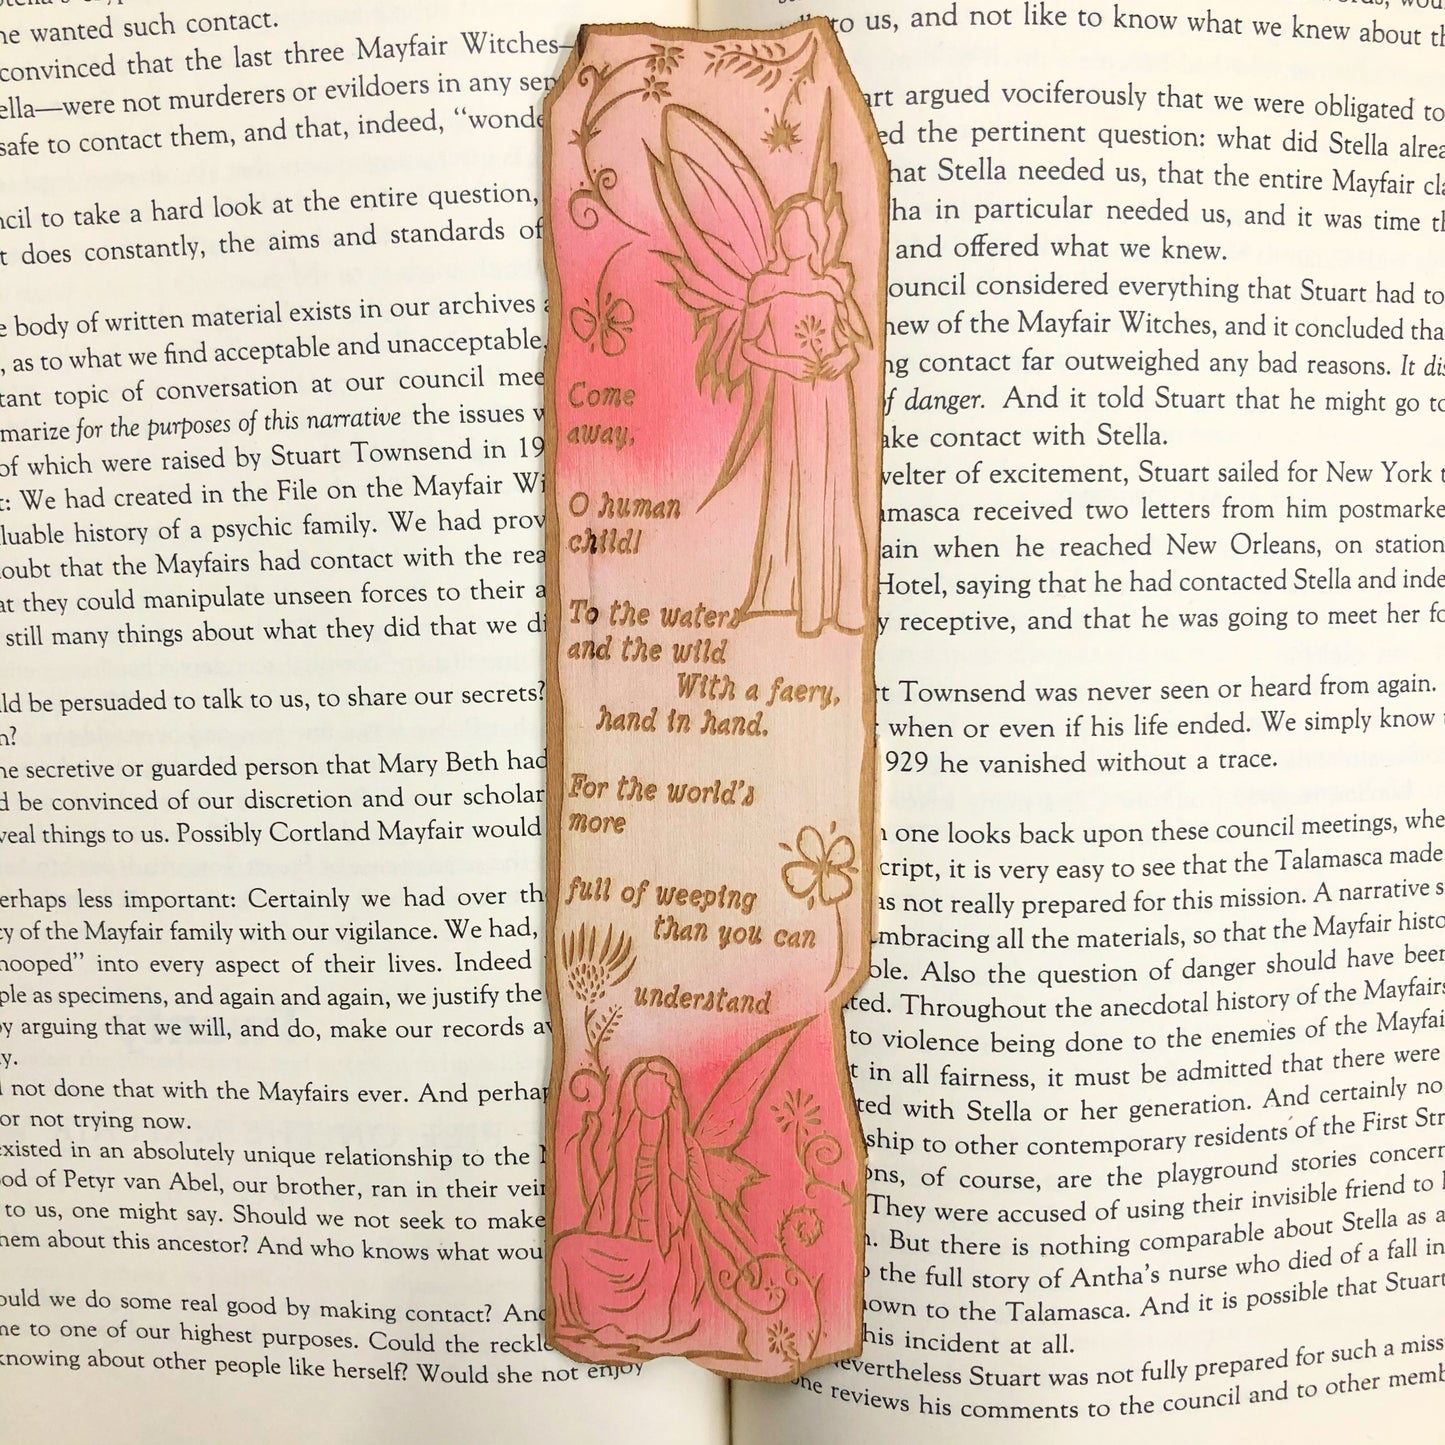 Fairy Wooden Bookmark